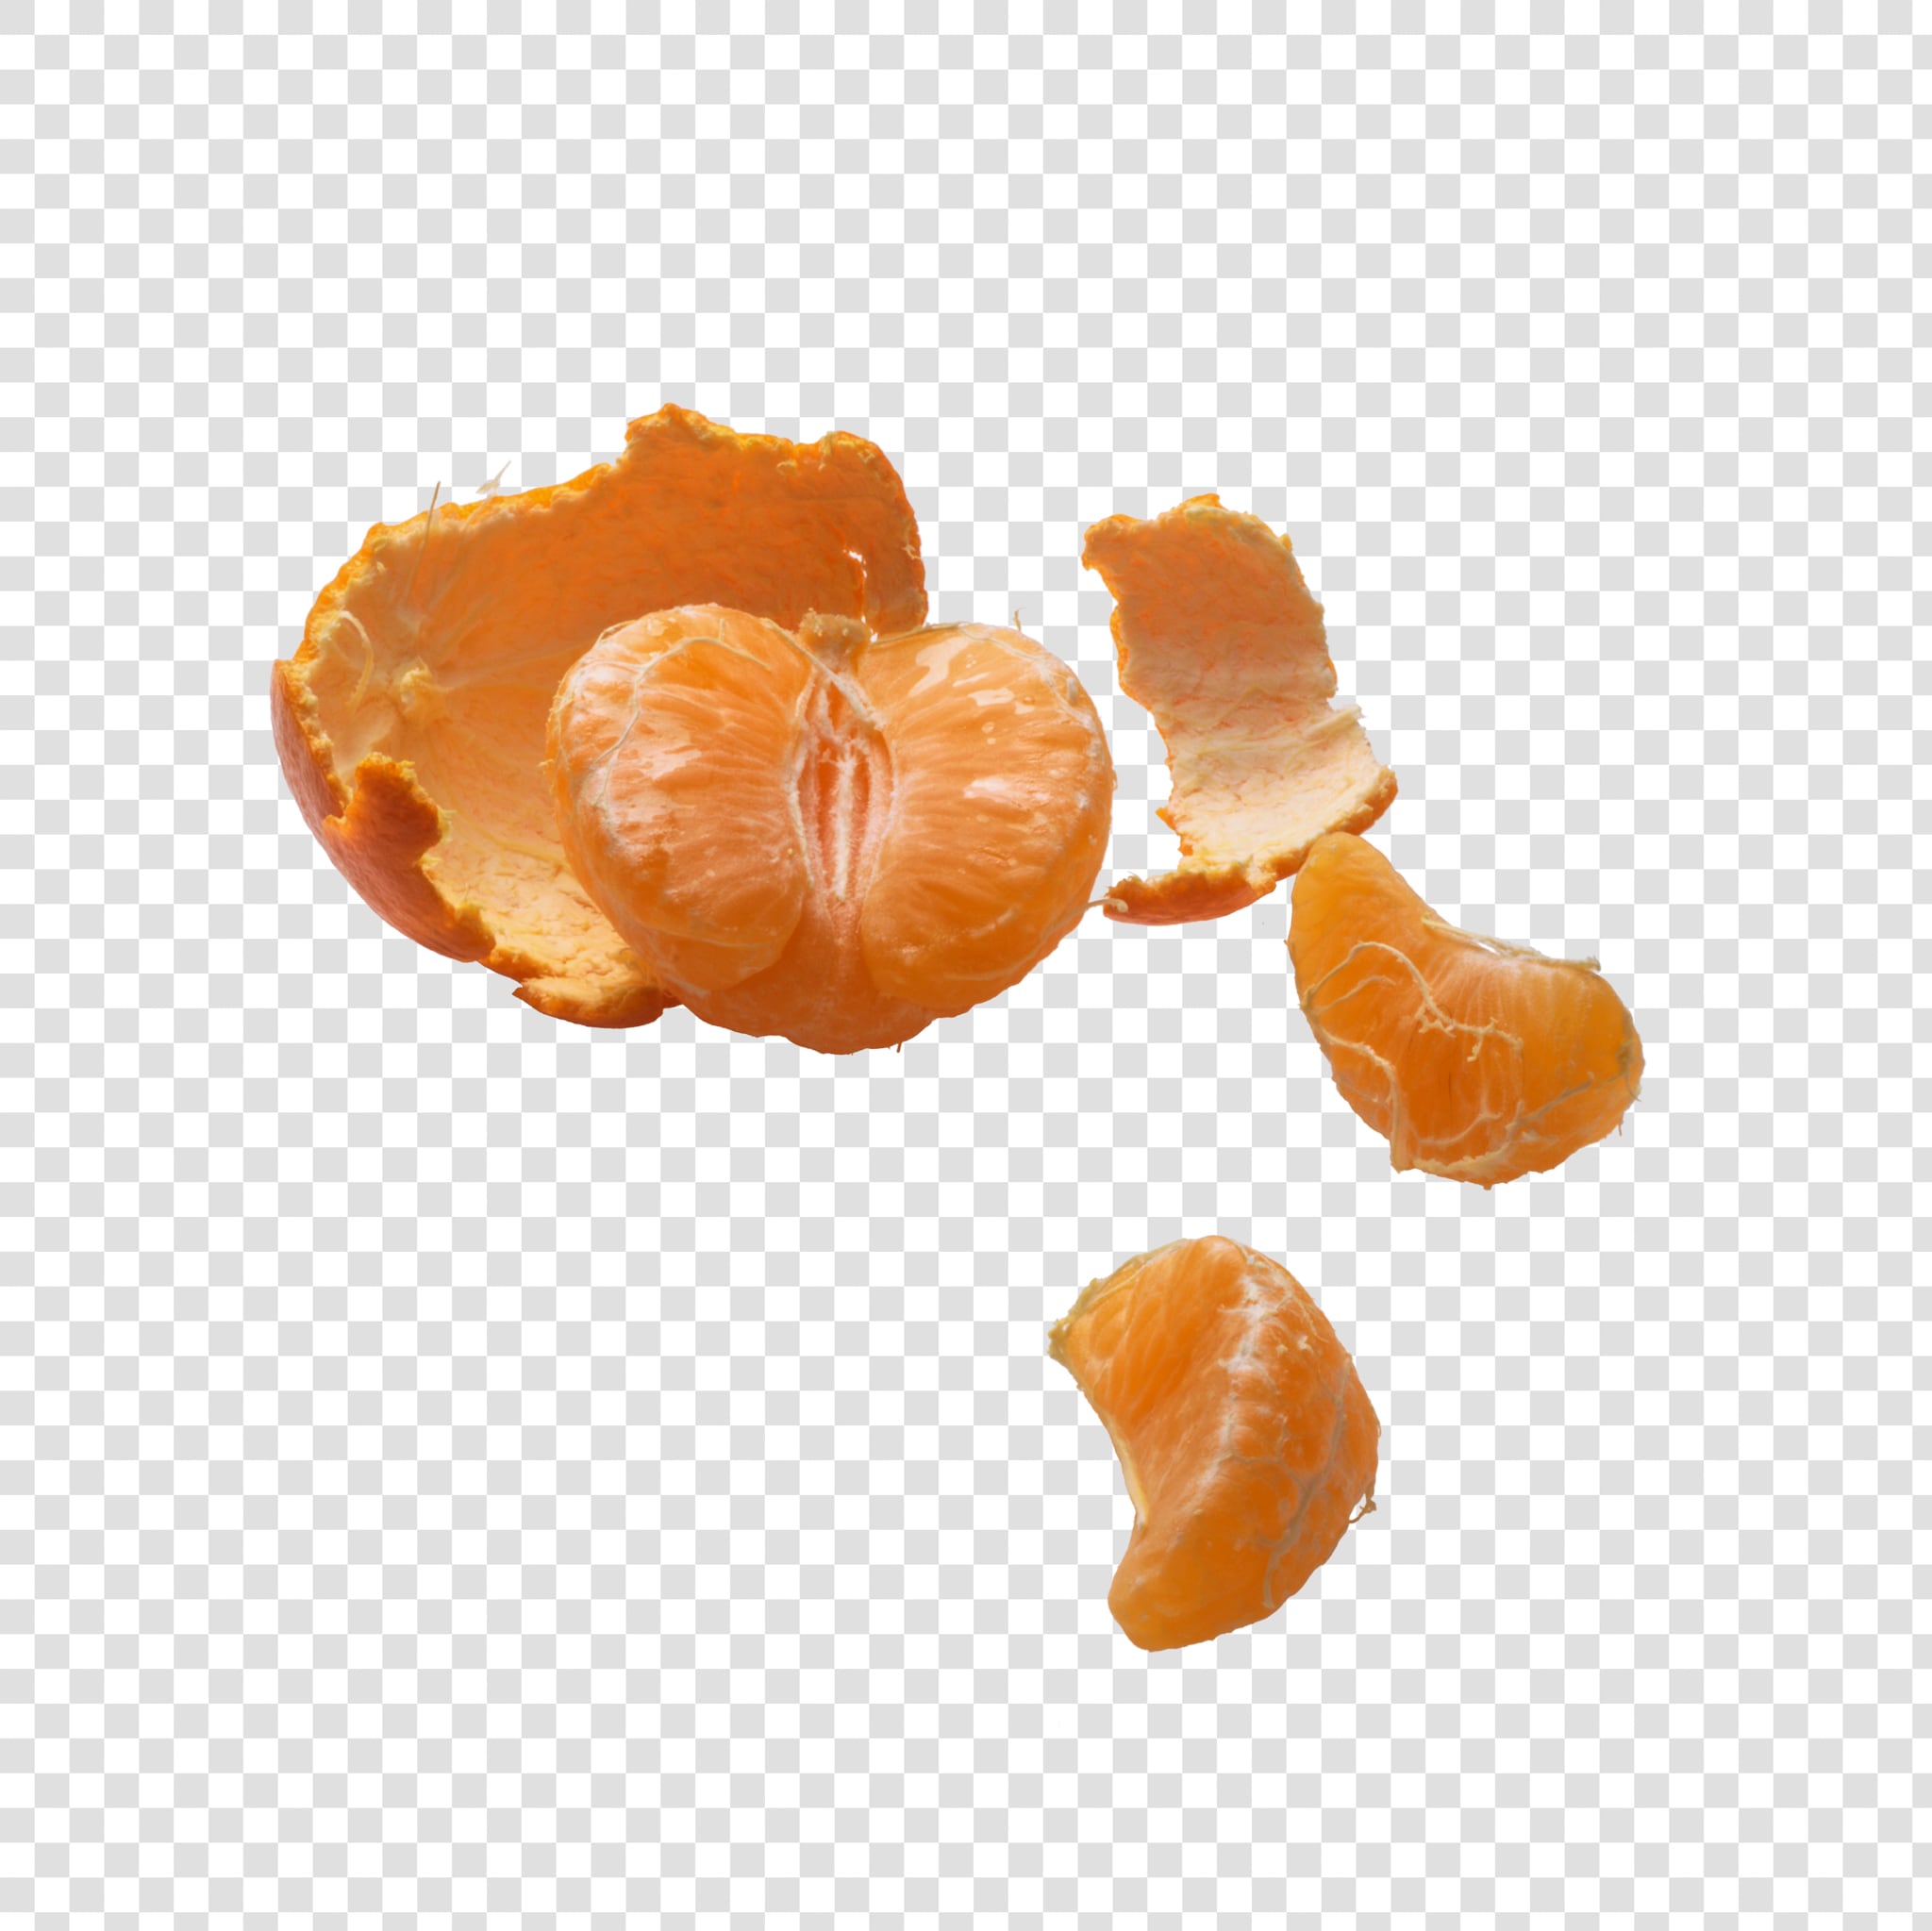 Orange PSD image with transparent background